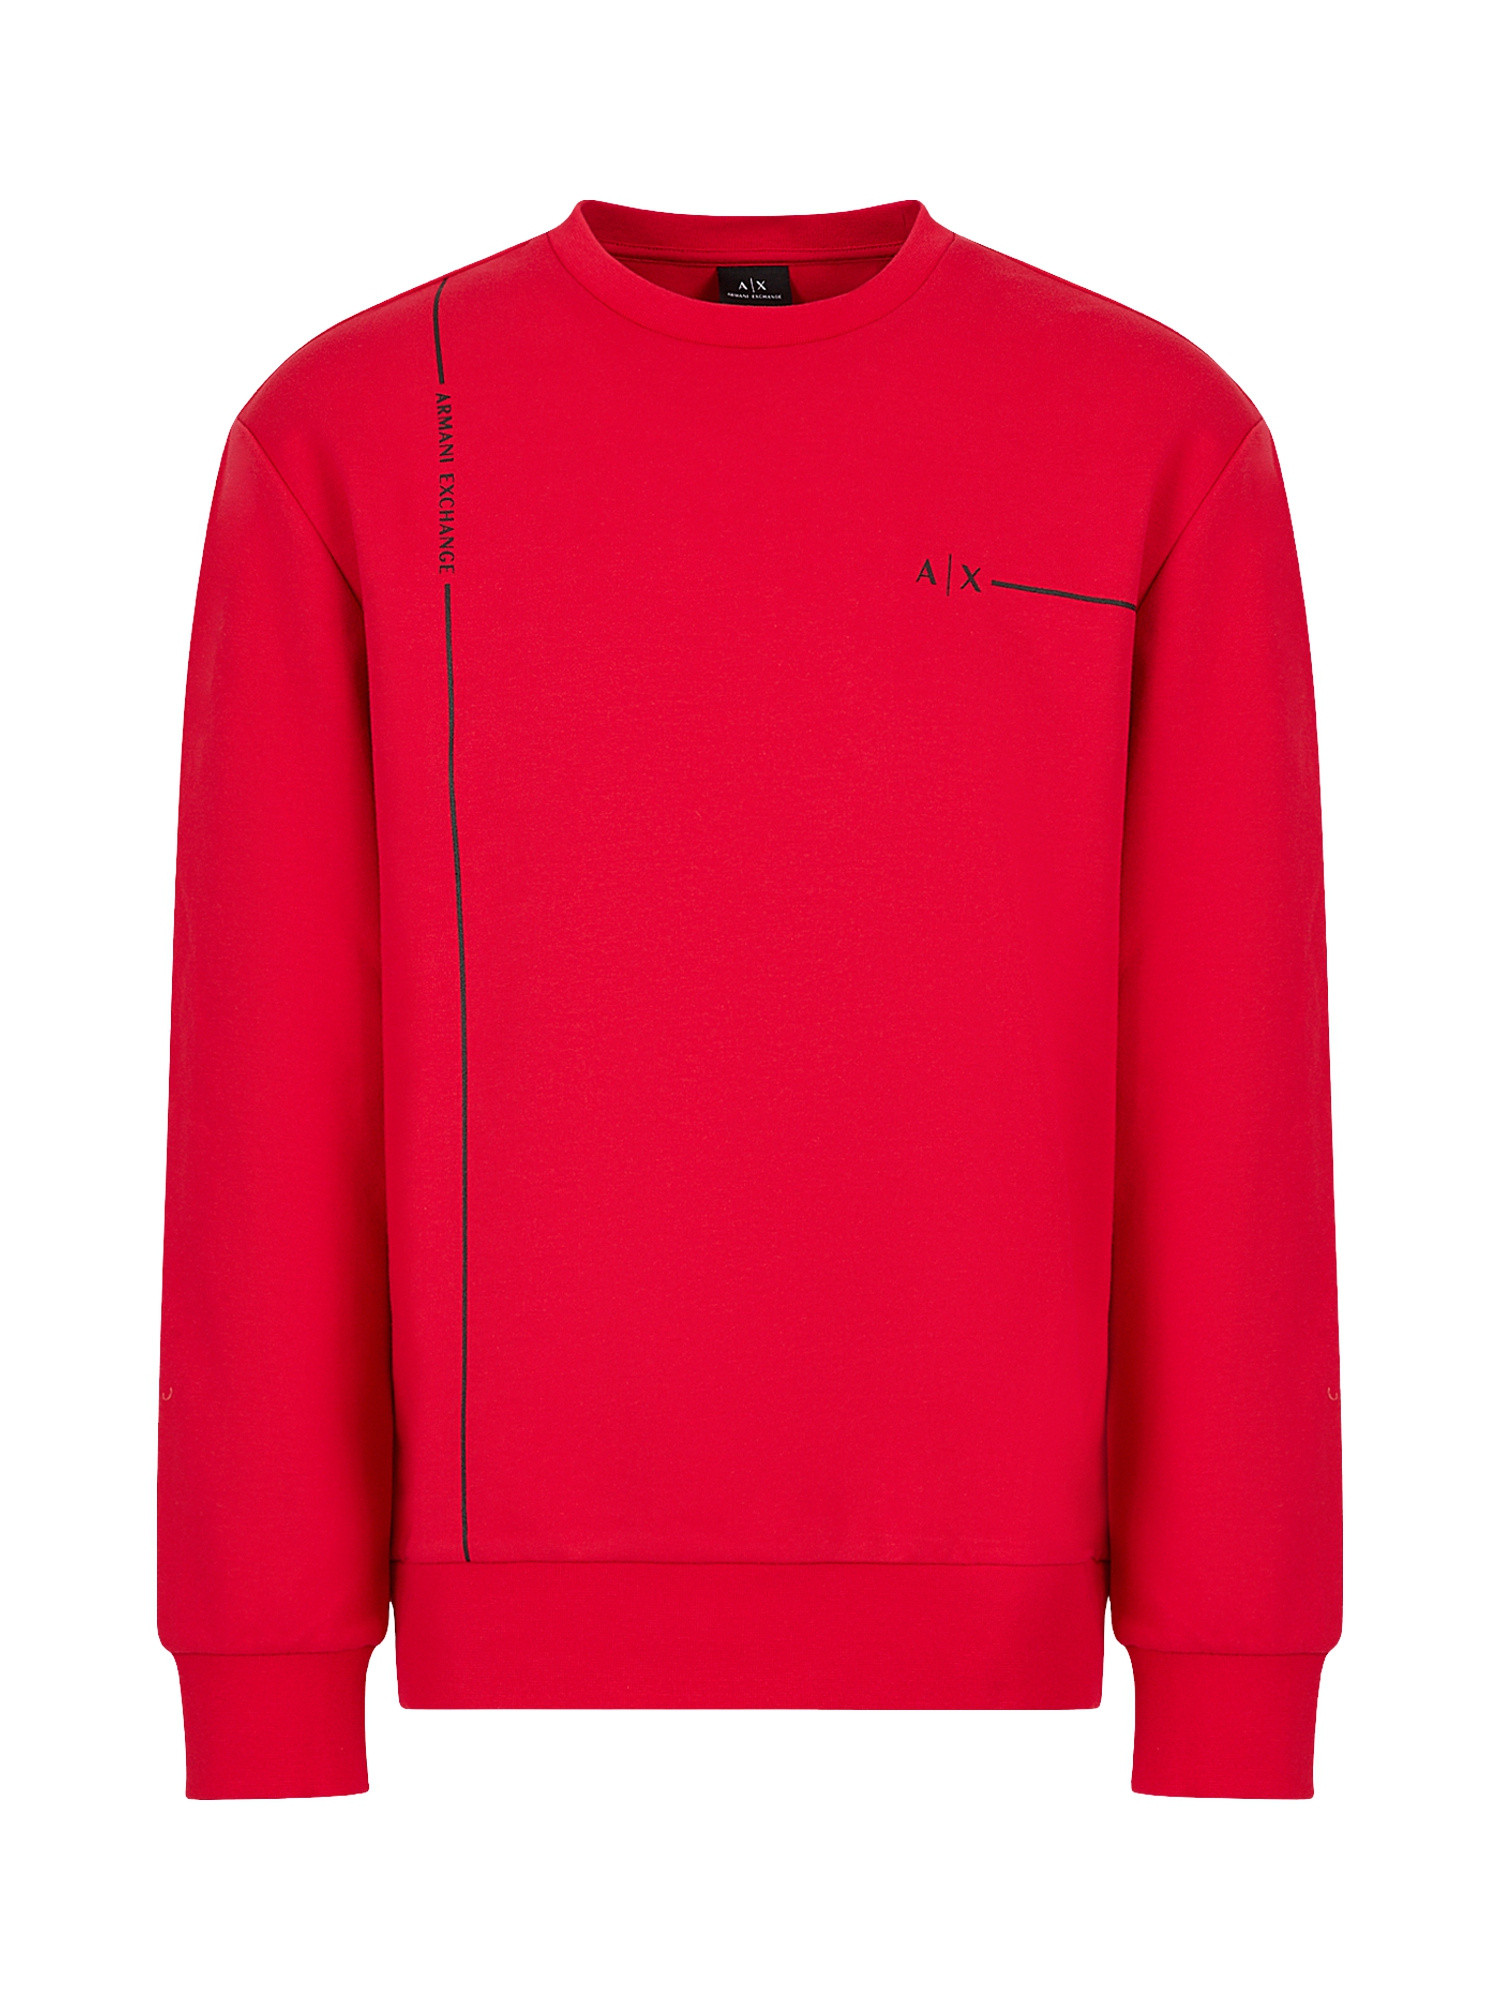 Armani Exchange - Sweatshirt with logo print, Red, large image number 0